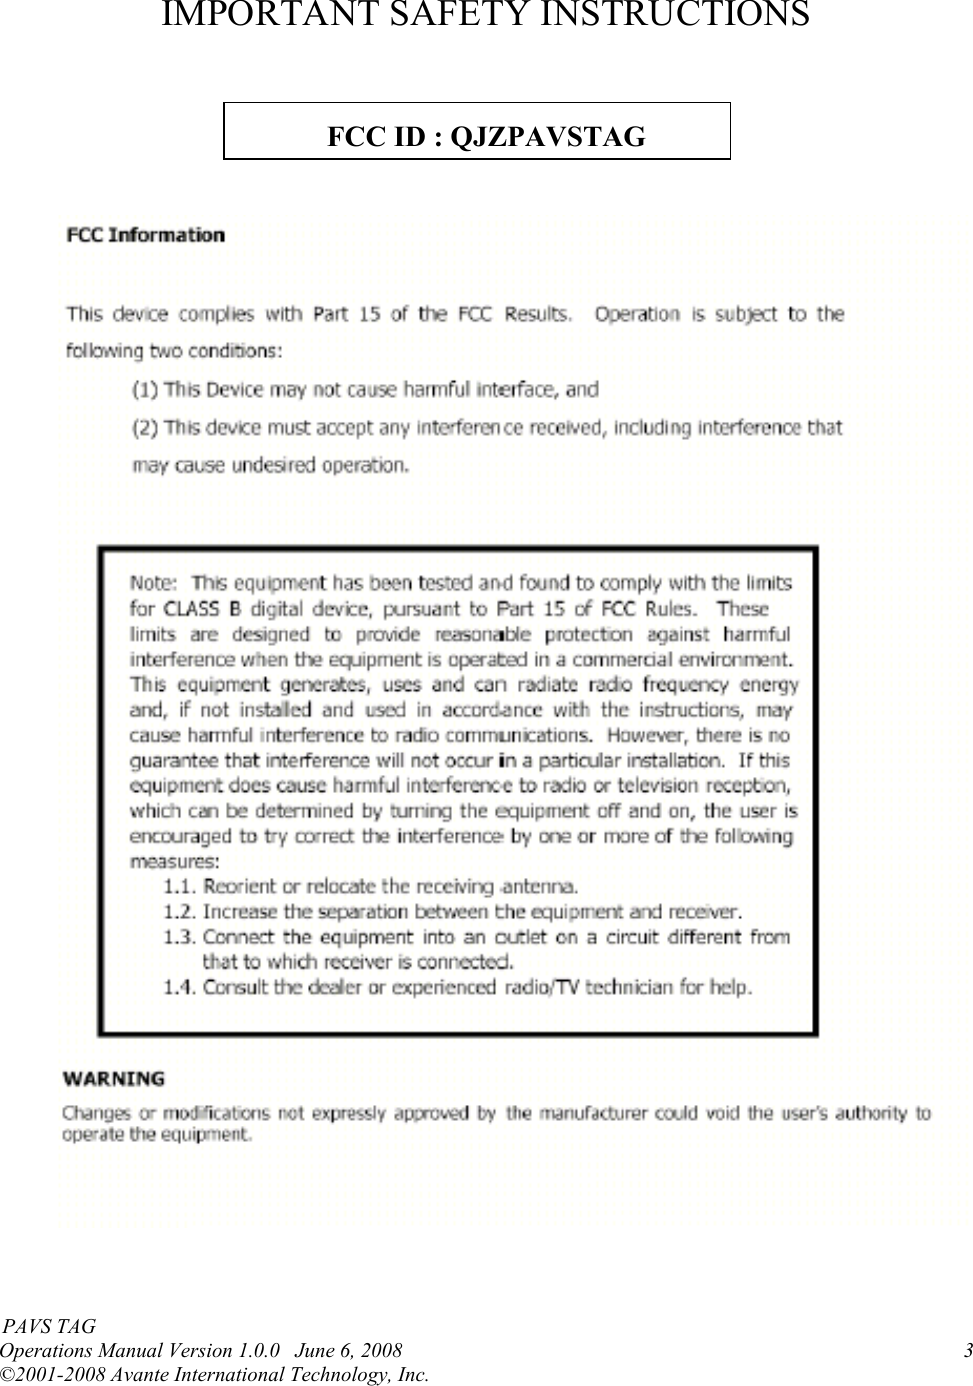 IMPORTANT SAFETY INSTRUCTIONS  FCC ID : QJZPAVSTAG                                         PAVS TAG  Operations Manual Version 1.0.0   June 6, 2008       3 ©2001-2008 Avante International Technology, Inc.  